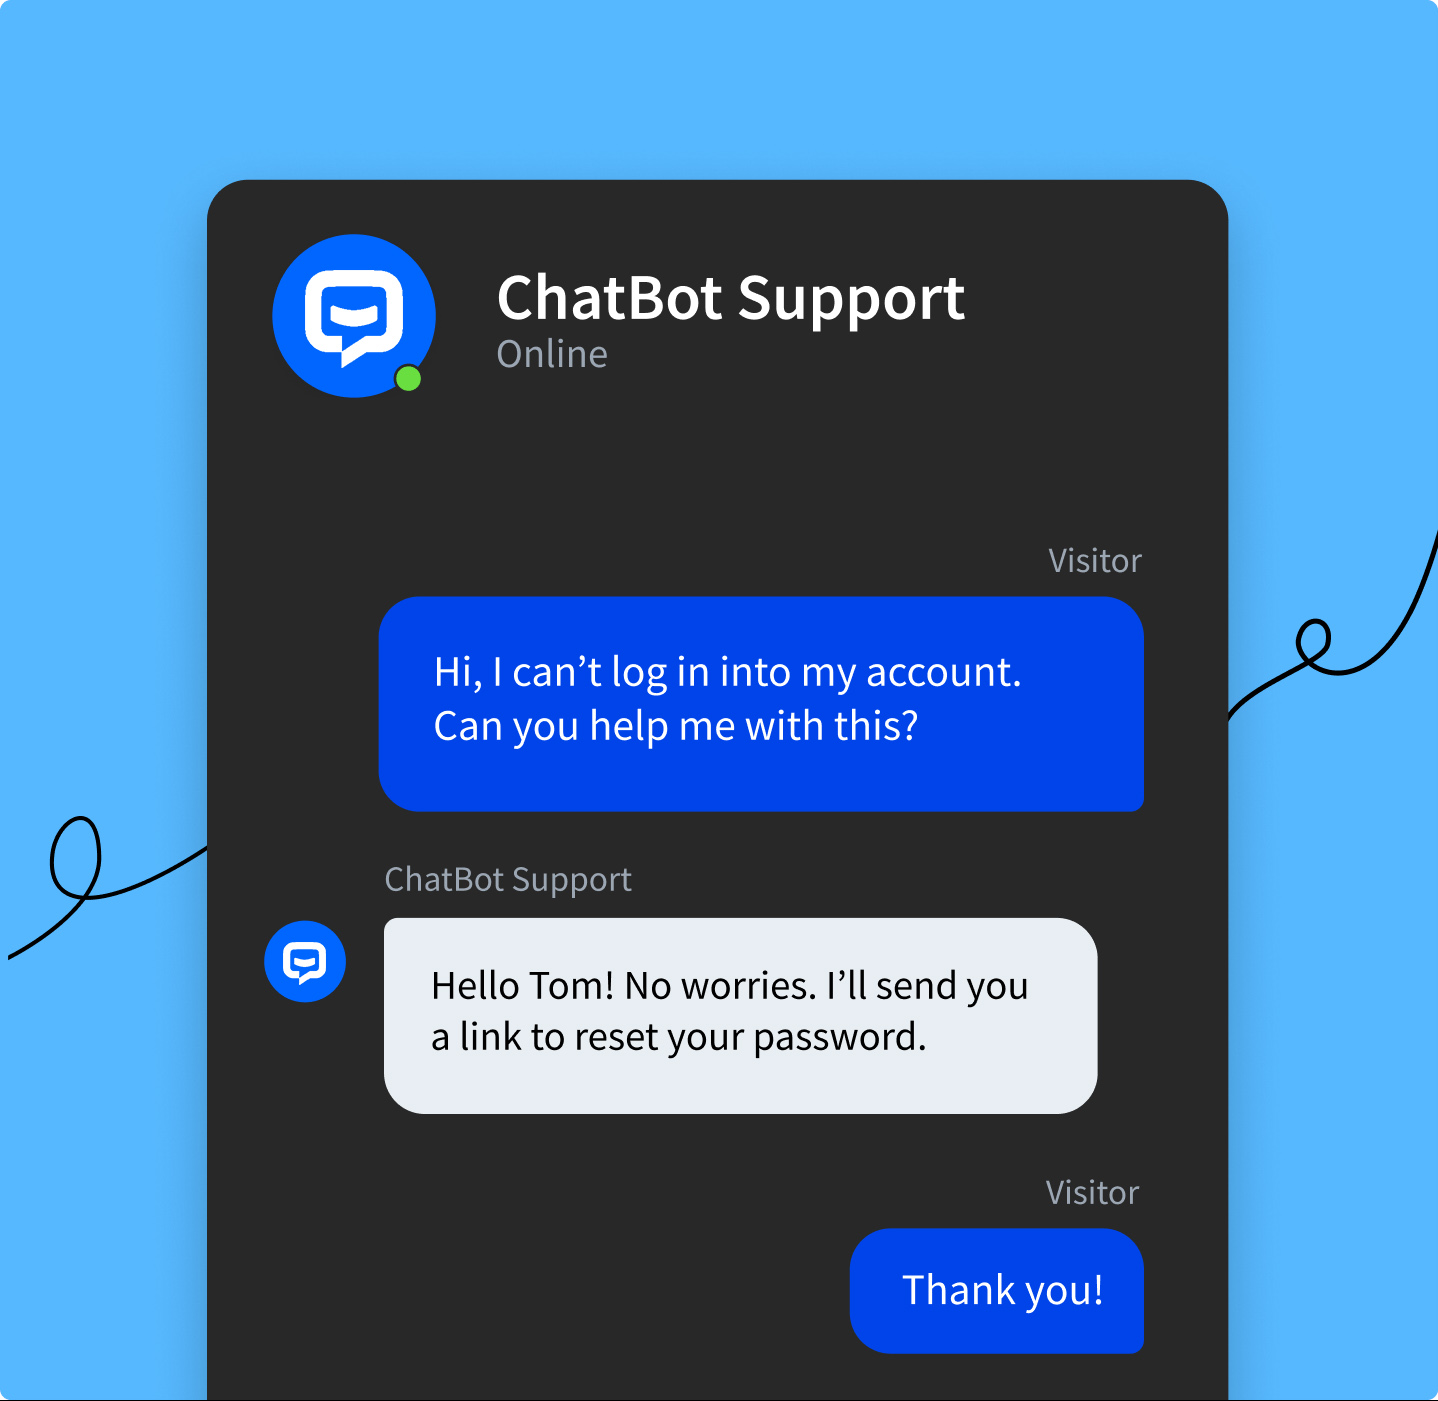 ChatBot support sample conversation.